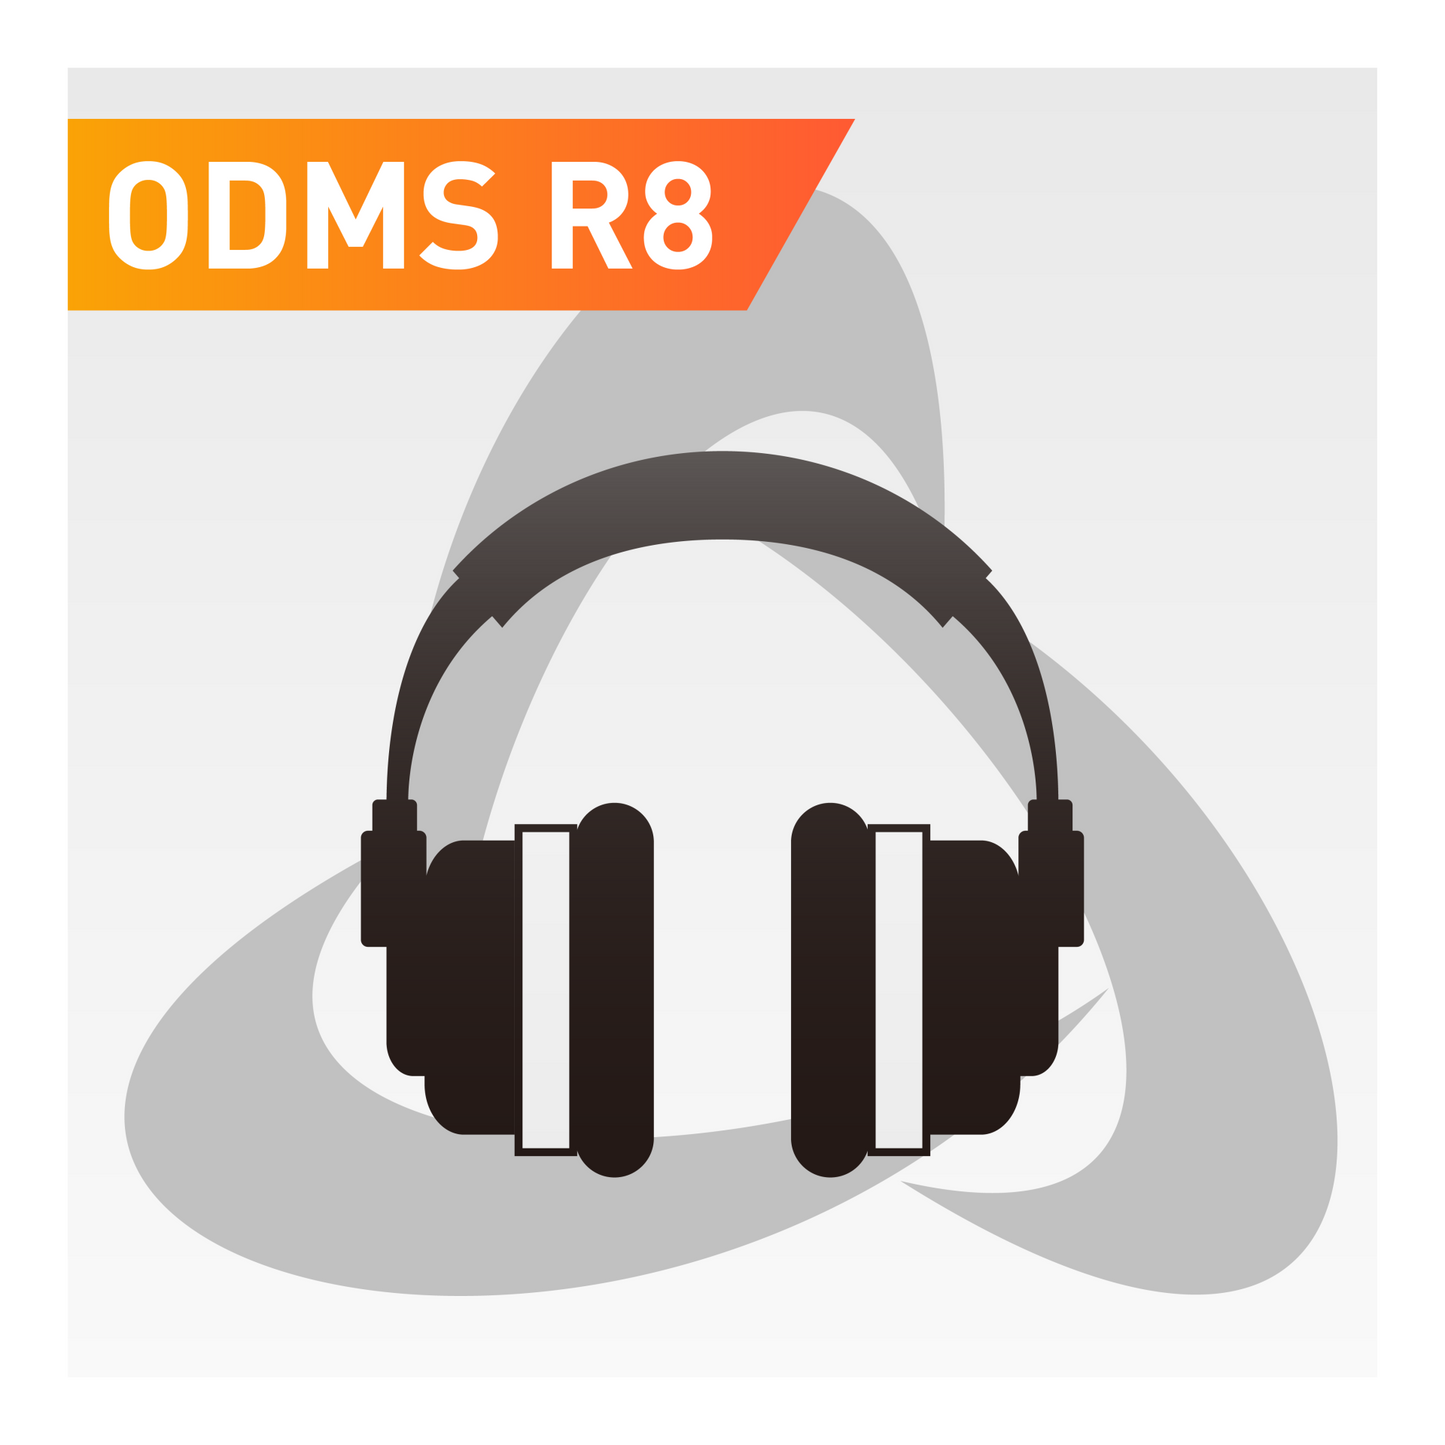 ODMS R8 Transcription Module [TM] Licence Key for Windows